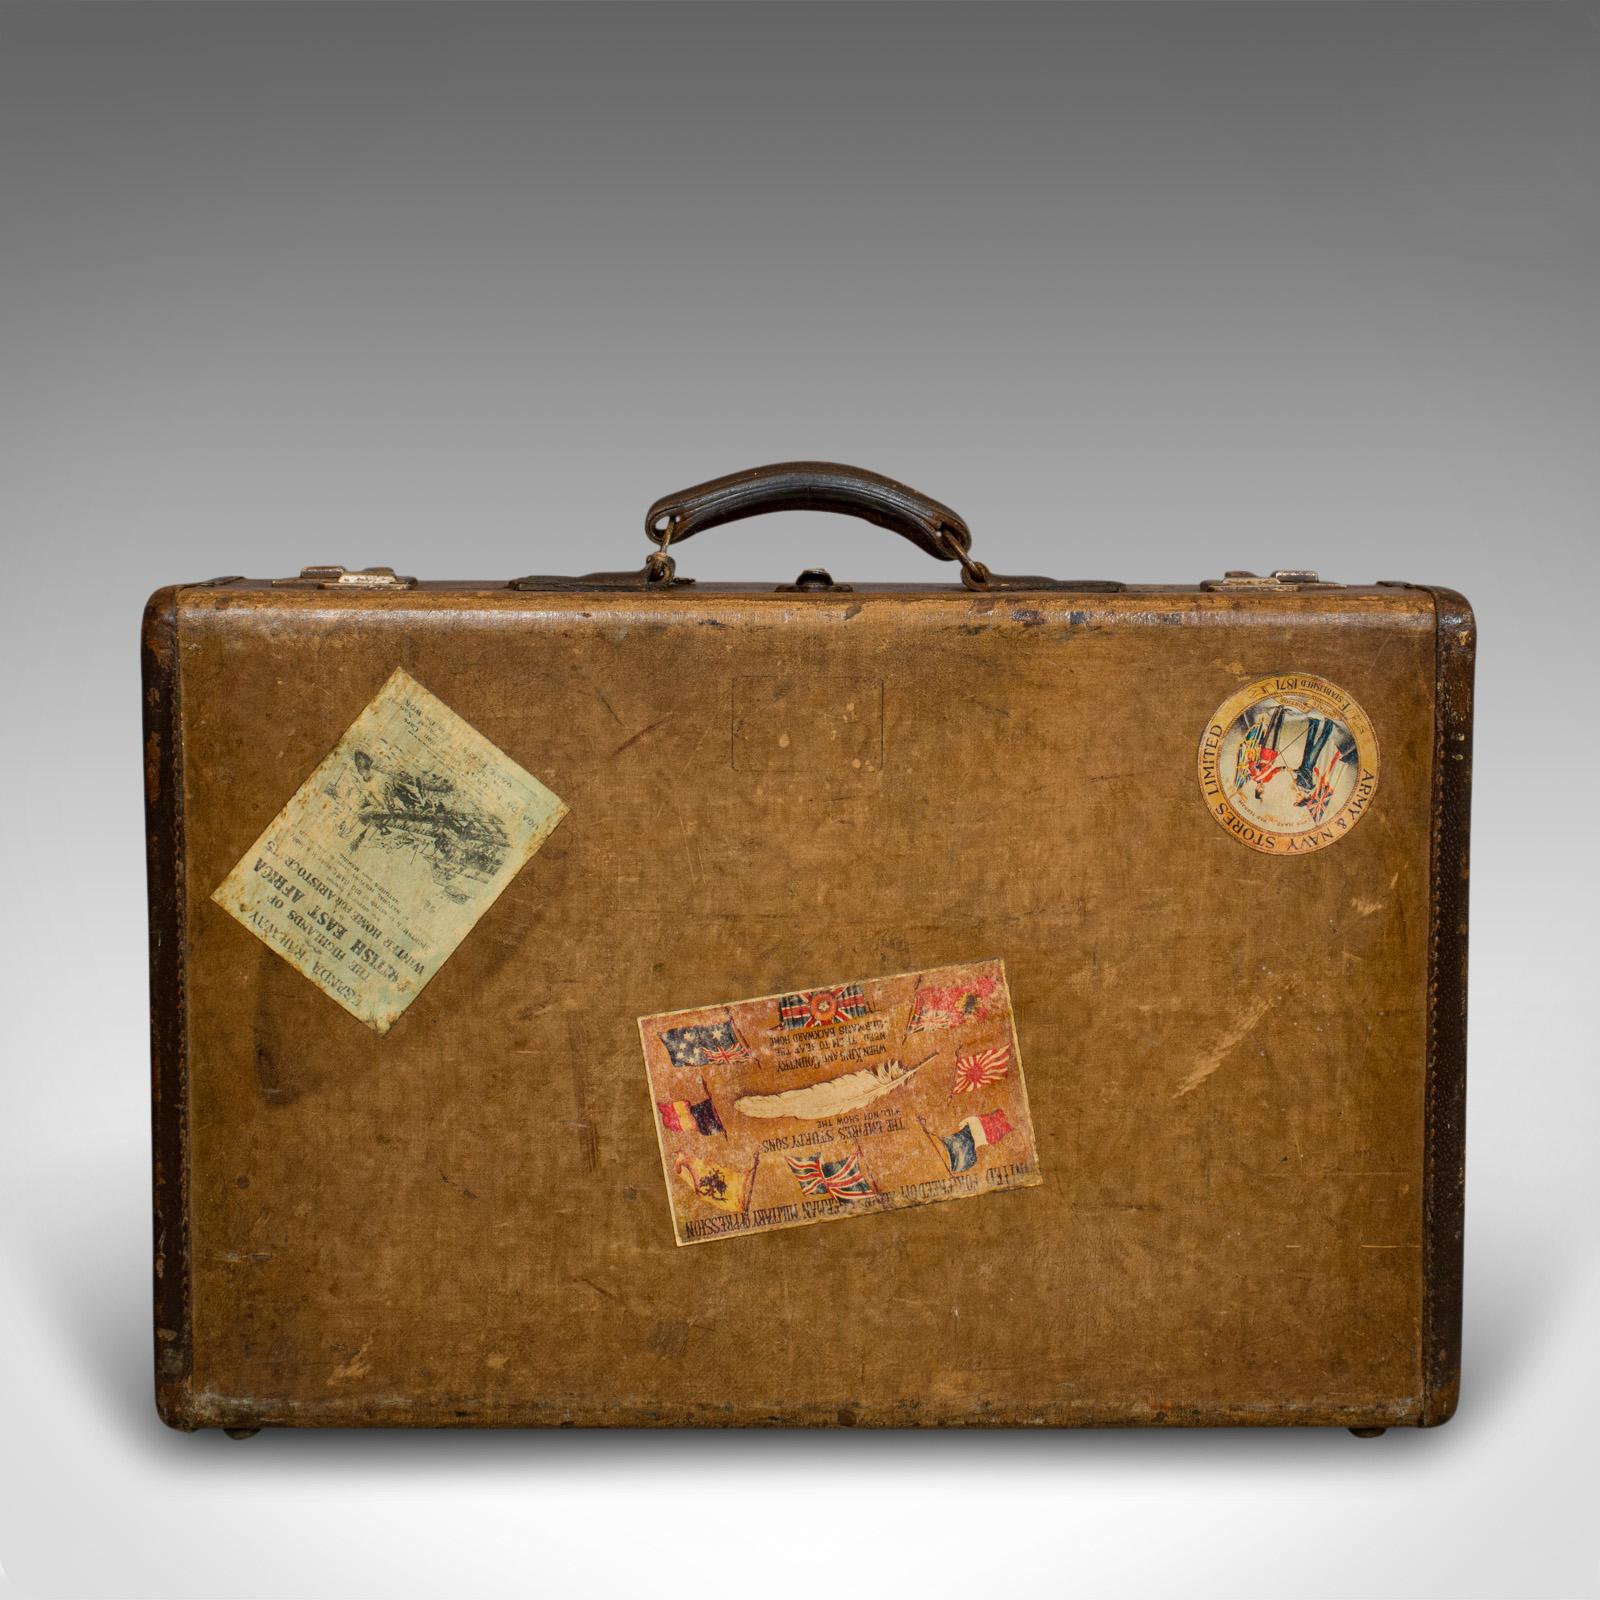 Art Deco Vintage Suitcase, English, Leather Bound, Travel Case, Decoration, 20th Century